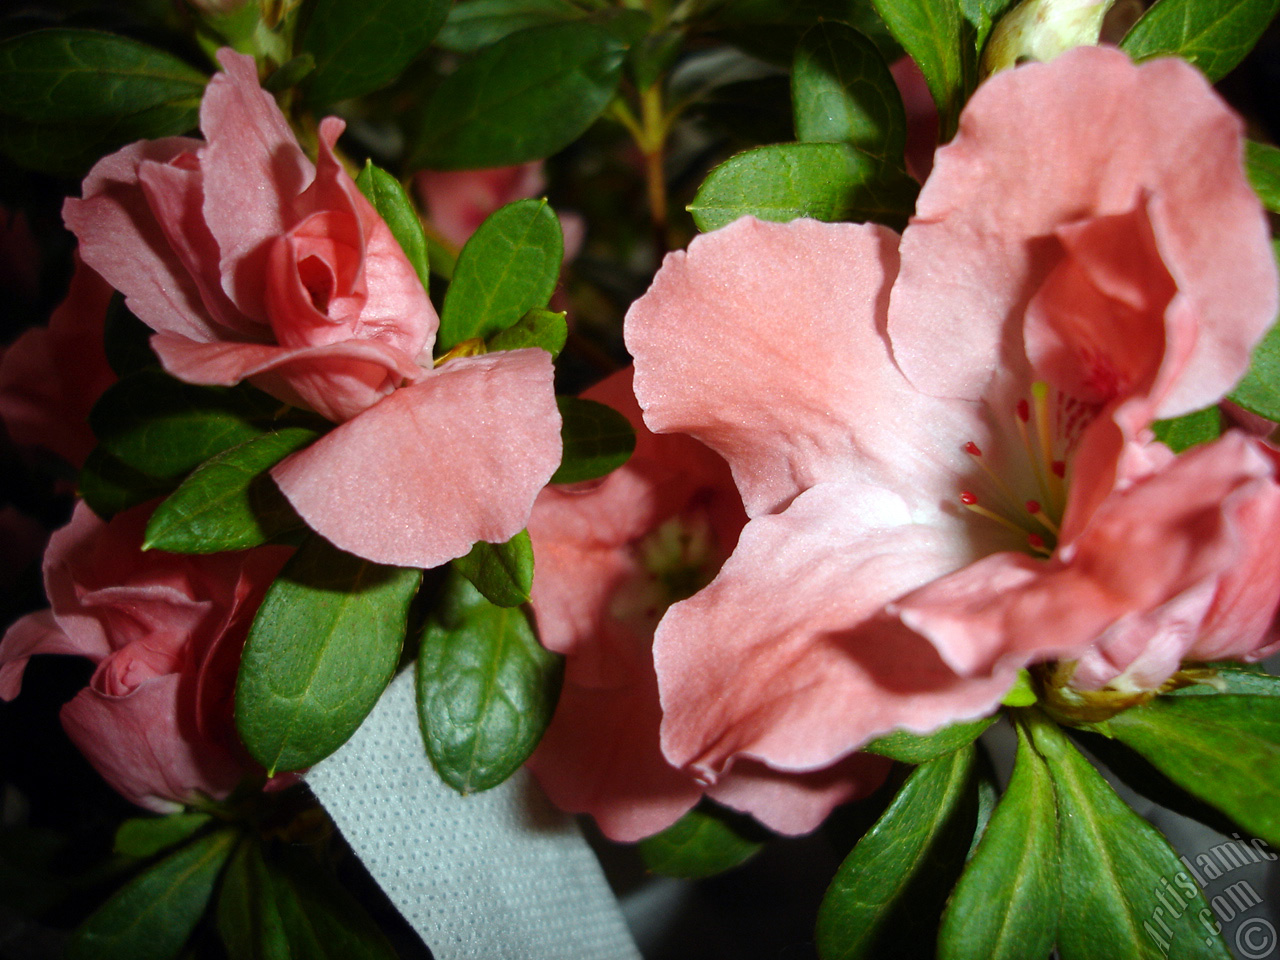 Pink color Azalea -Rhododendron- flower.
